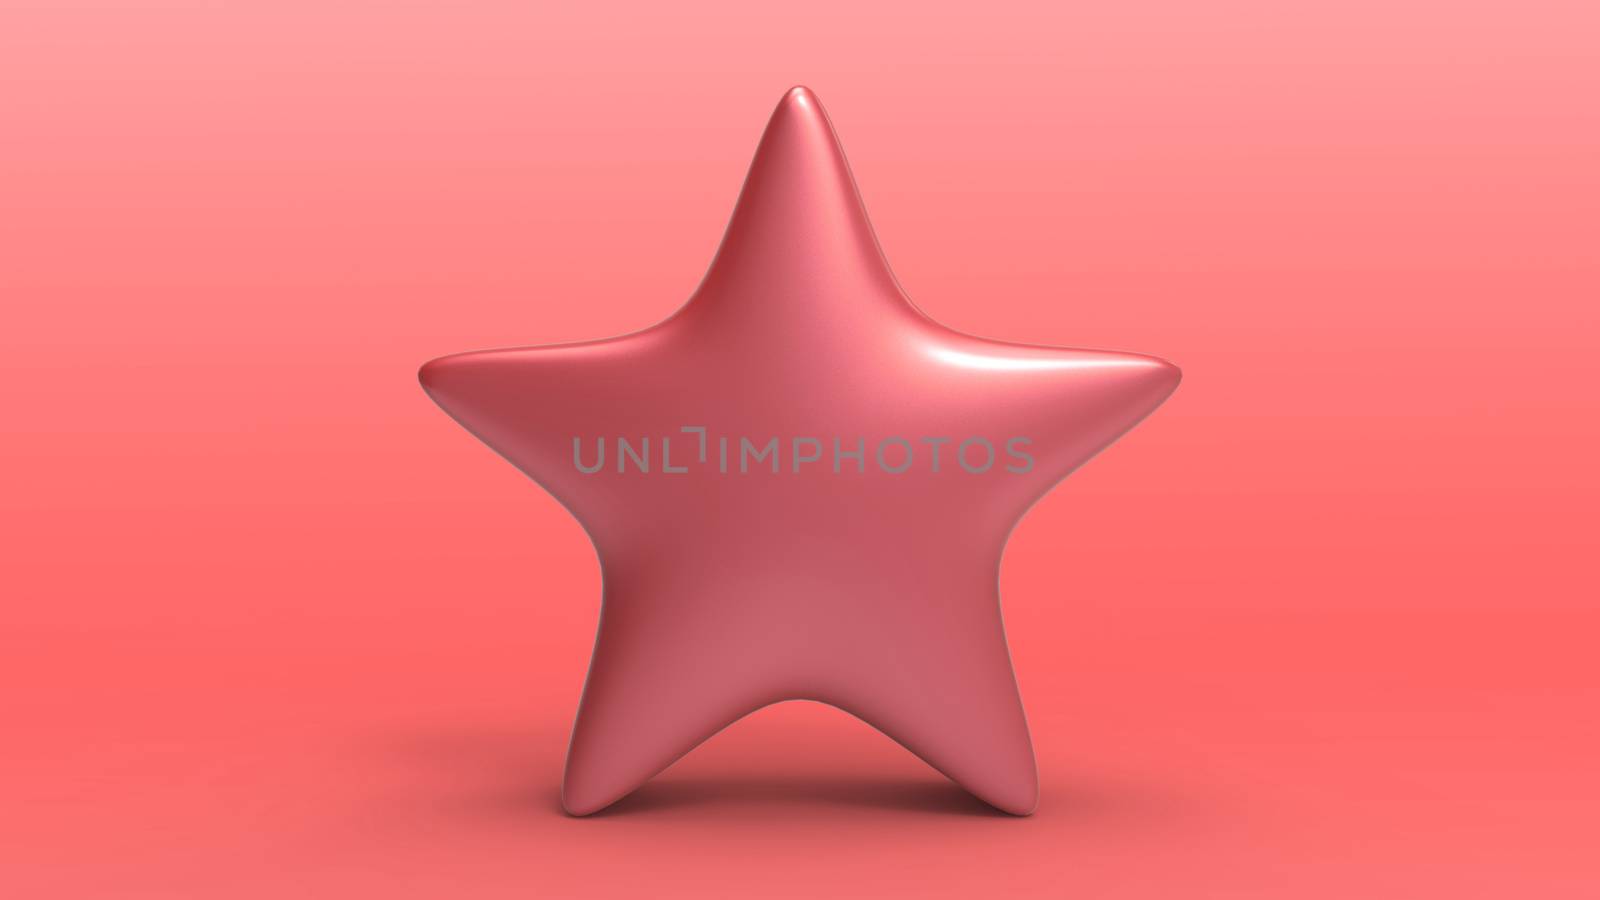 3d red star on color background. Render and illustration of golden star for premium